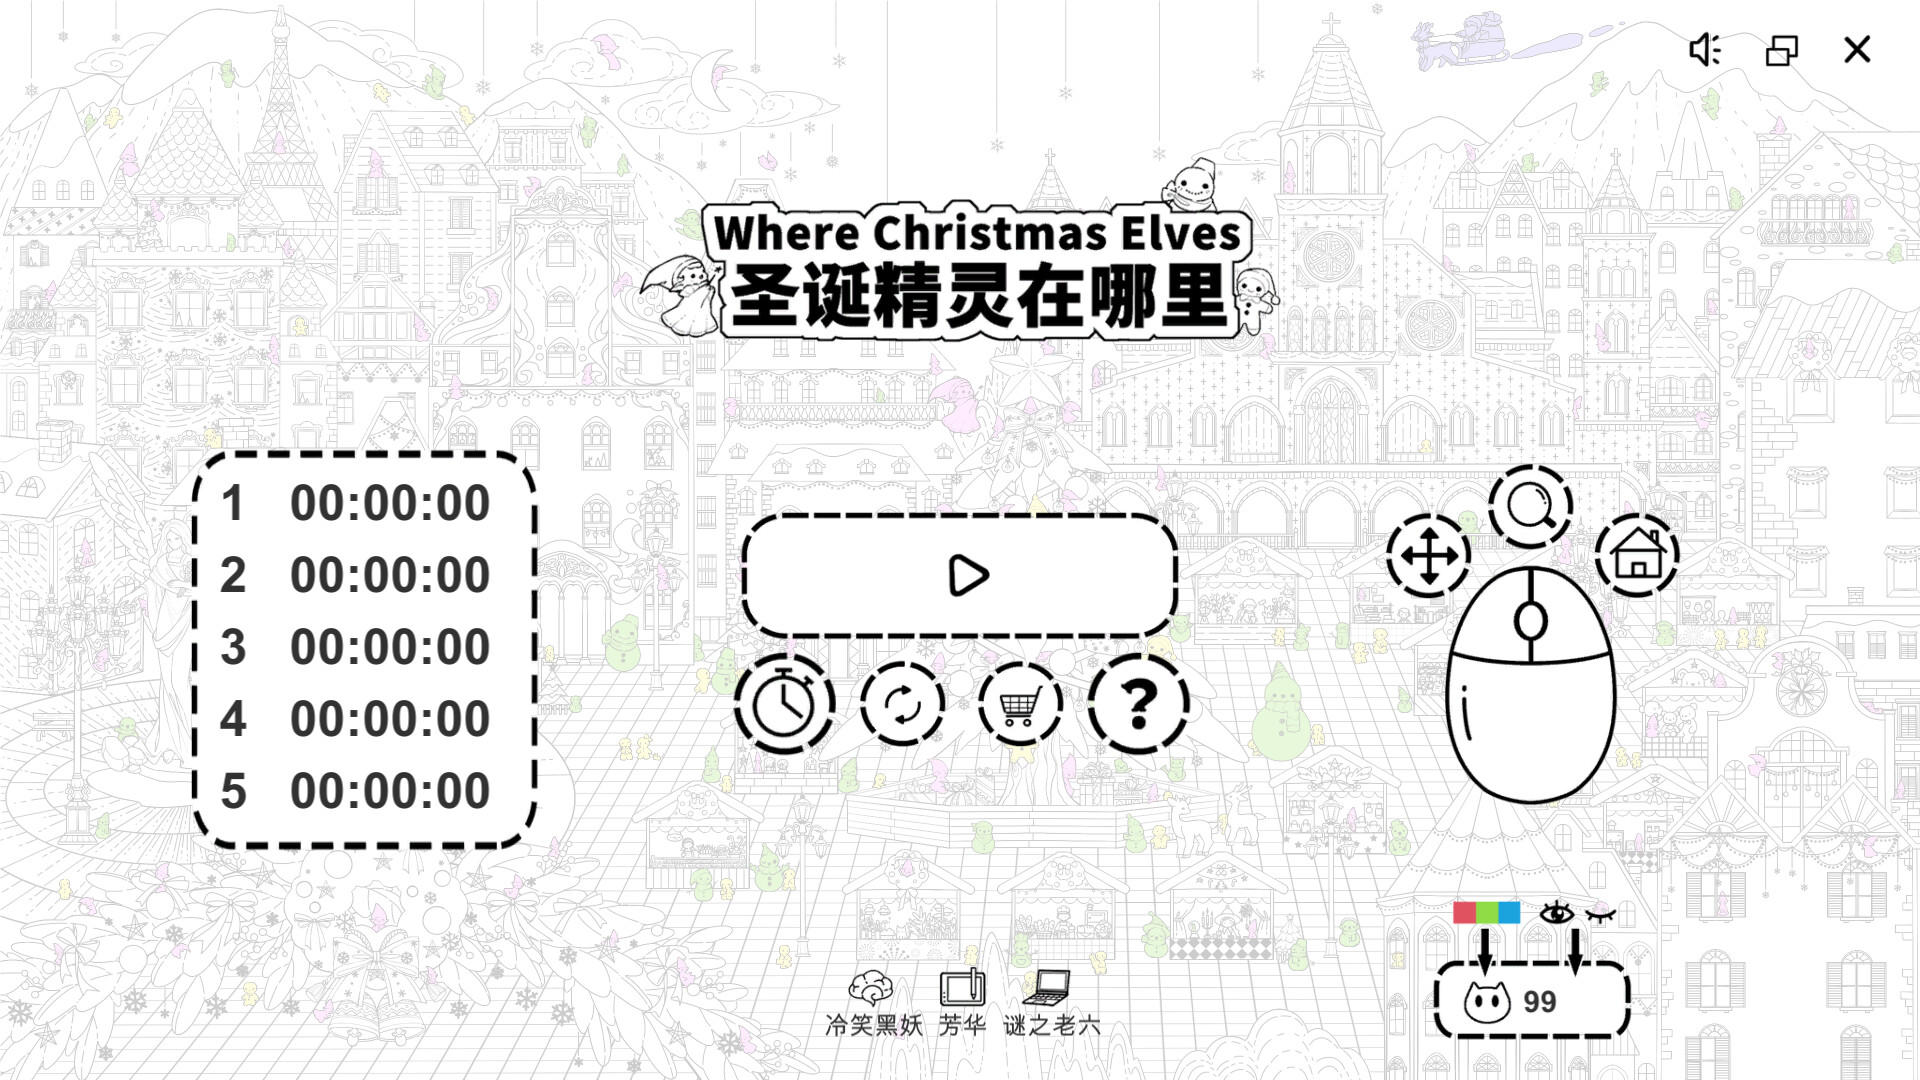 Screenshot 1 of តើ Christmas Elves នៅឯណា Christmas Elves នៅឯណា? 